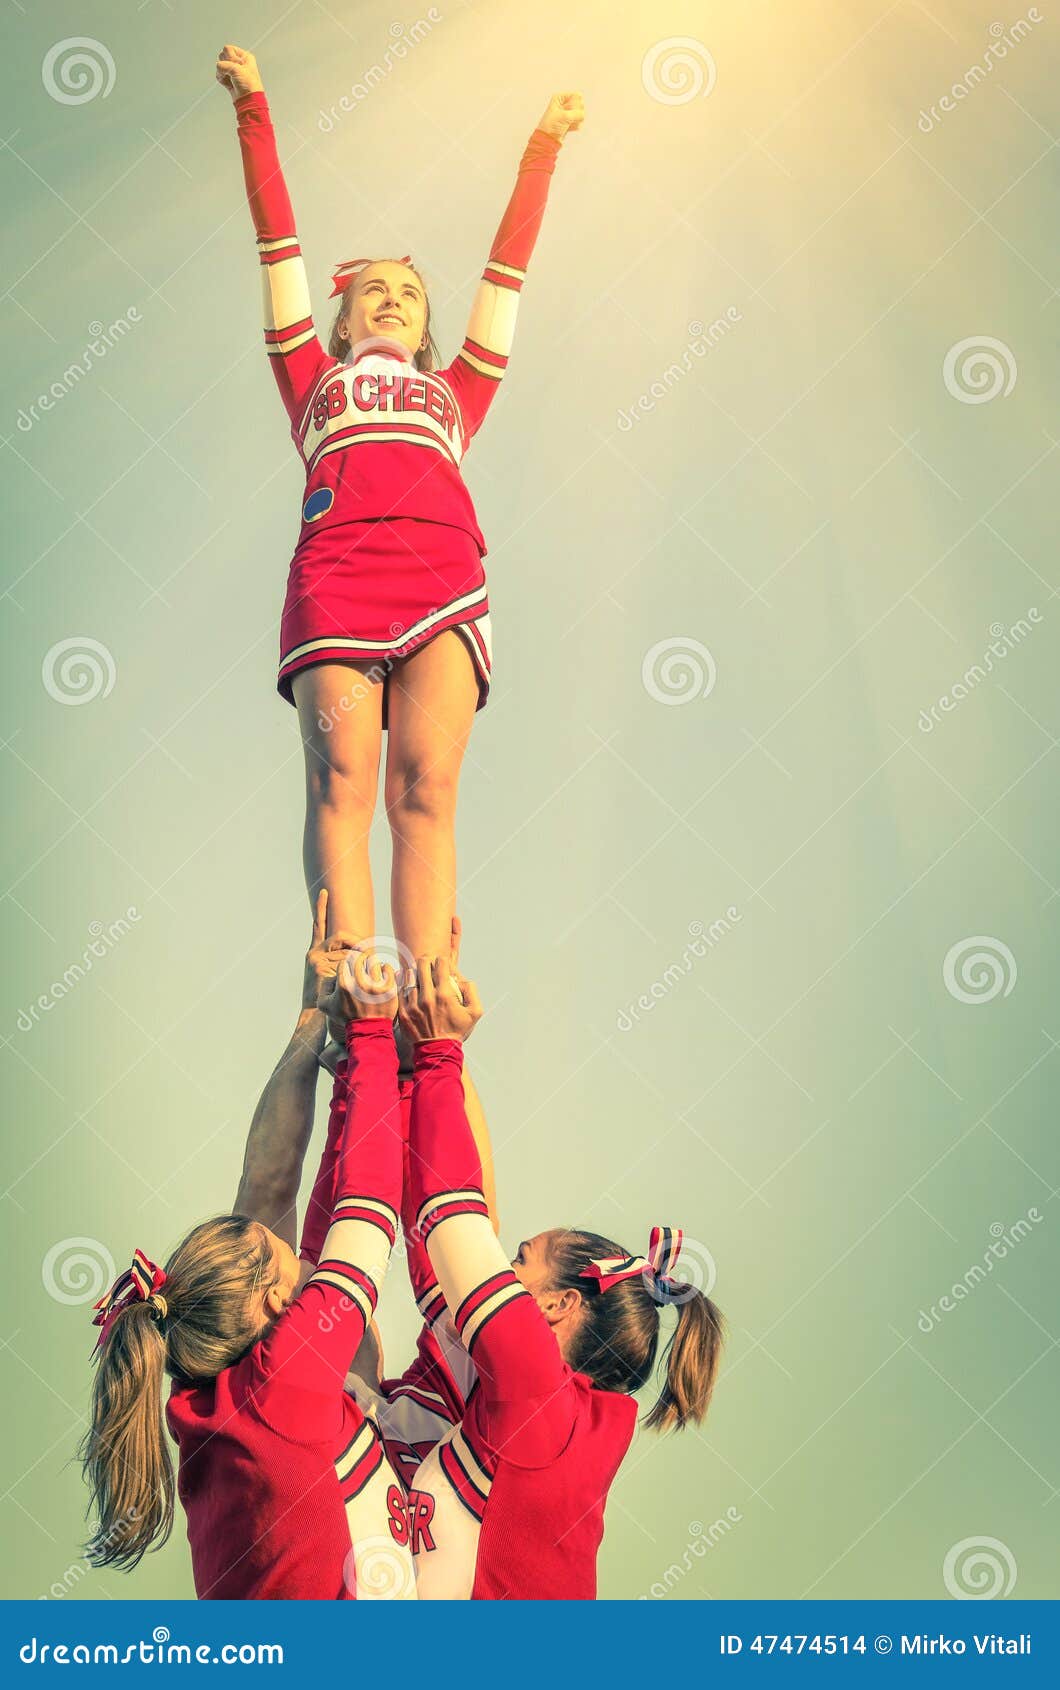 cheerleaders in action on a vintage filtered look